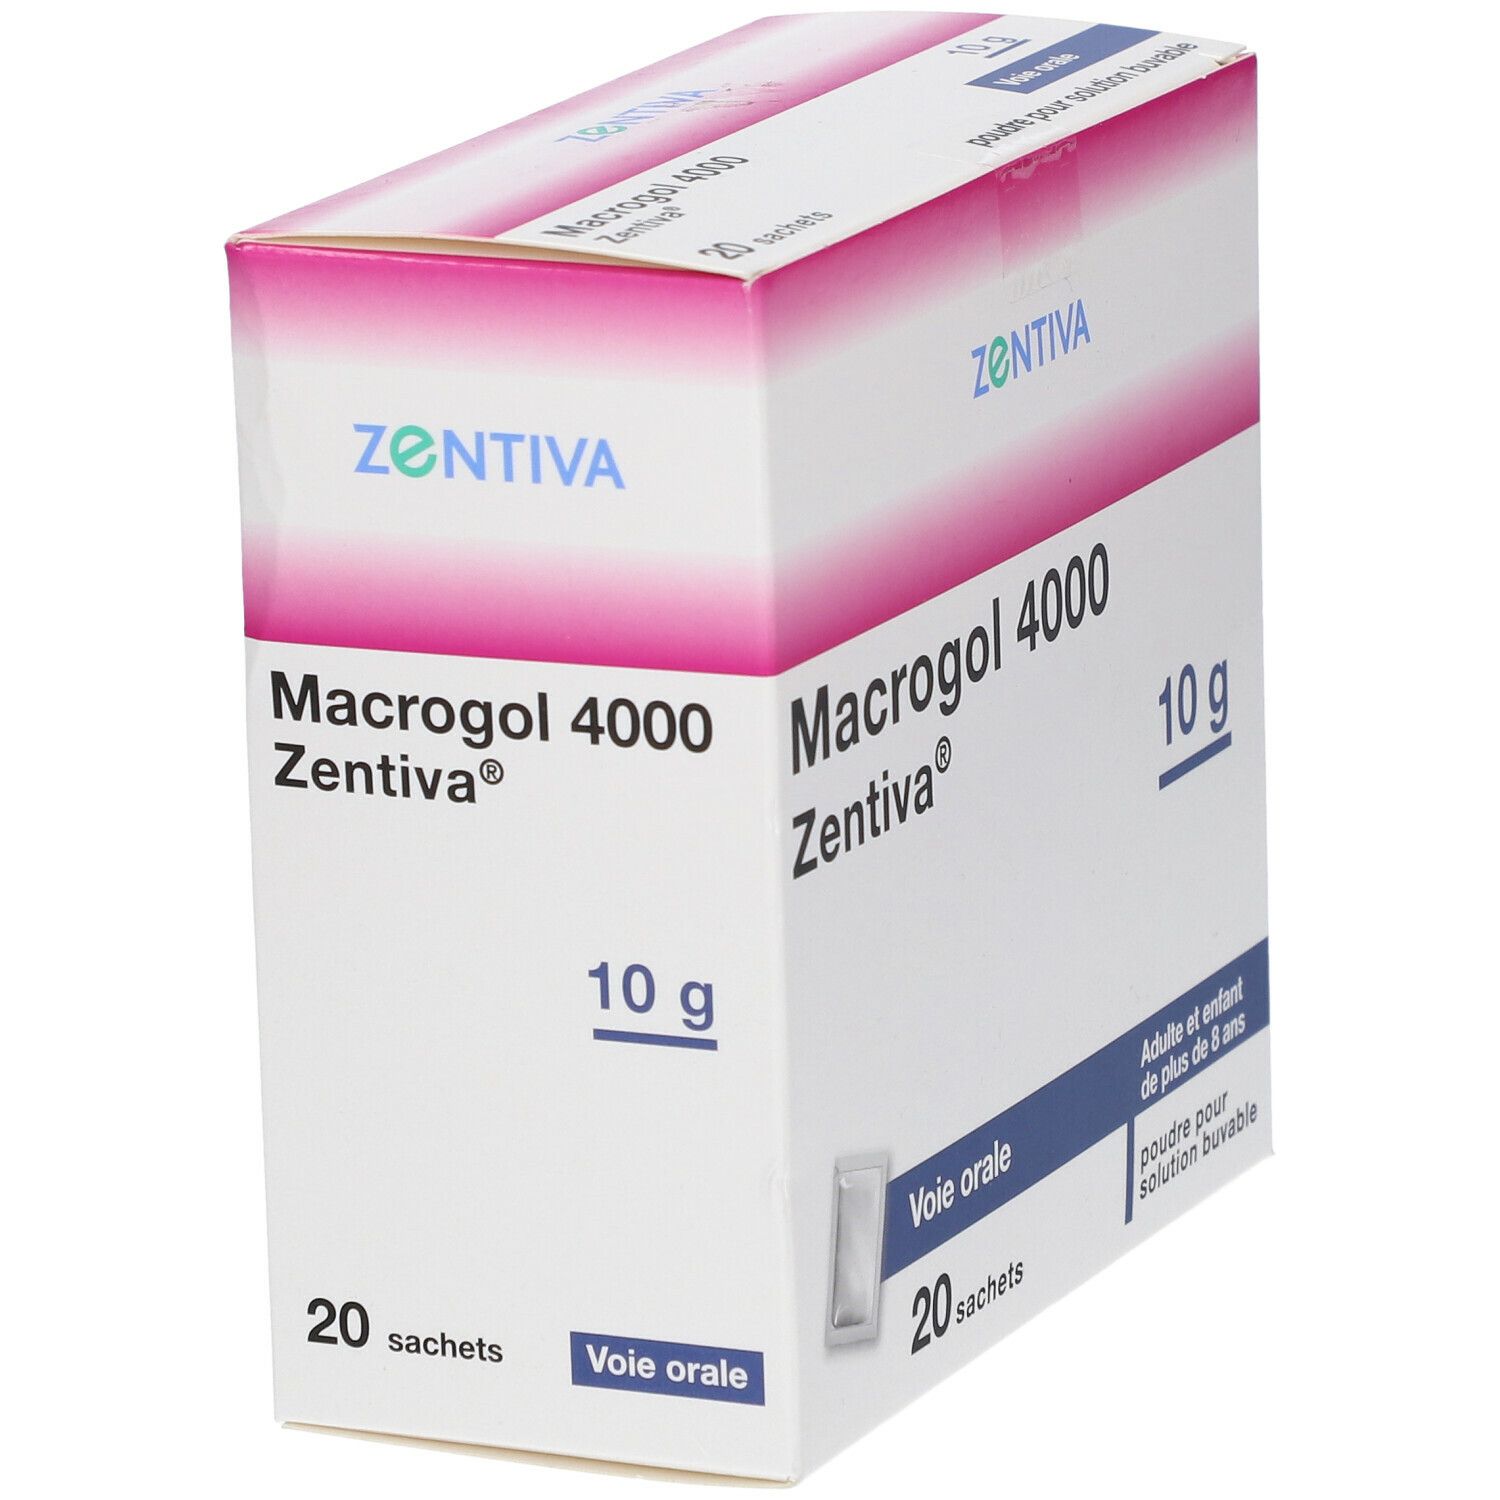 Macrogol 4000 Zentiva® 10 g